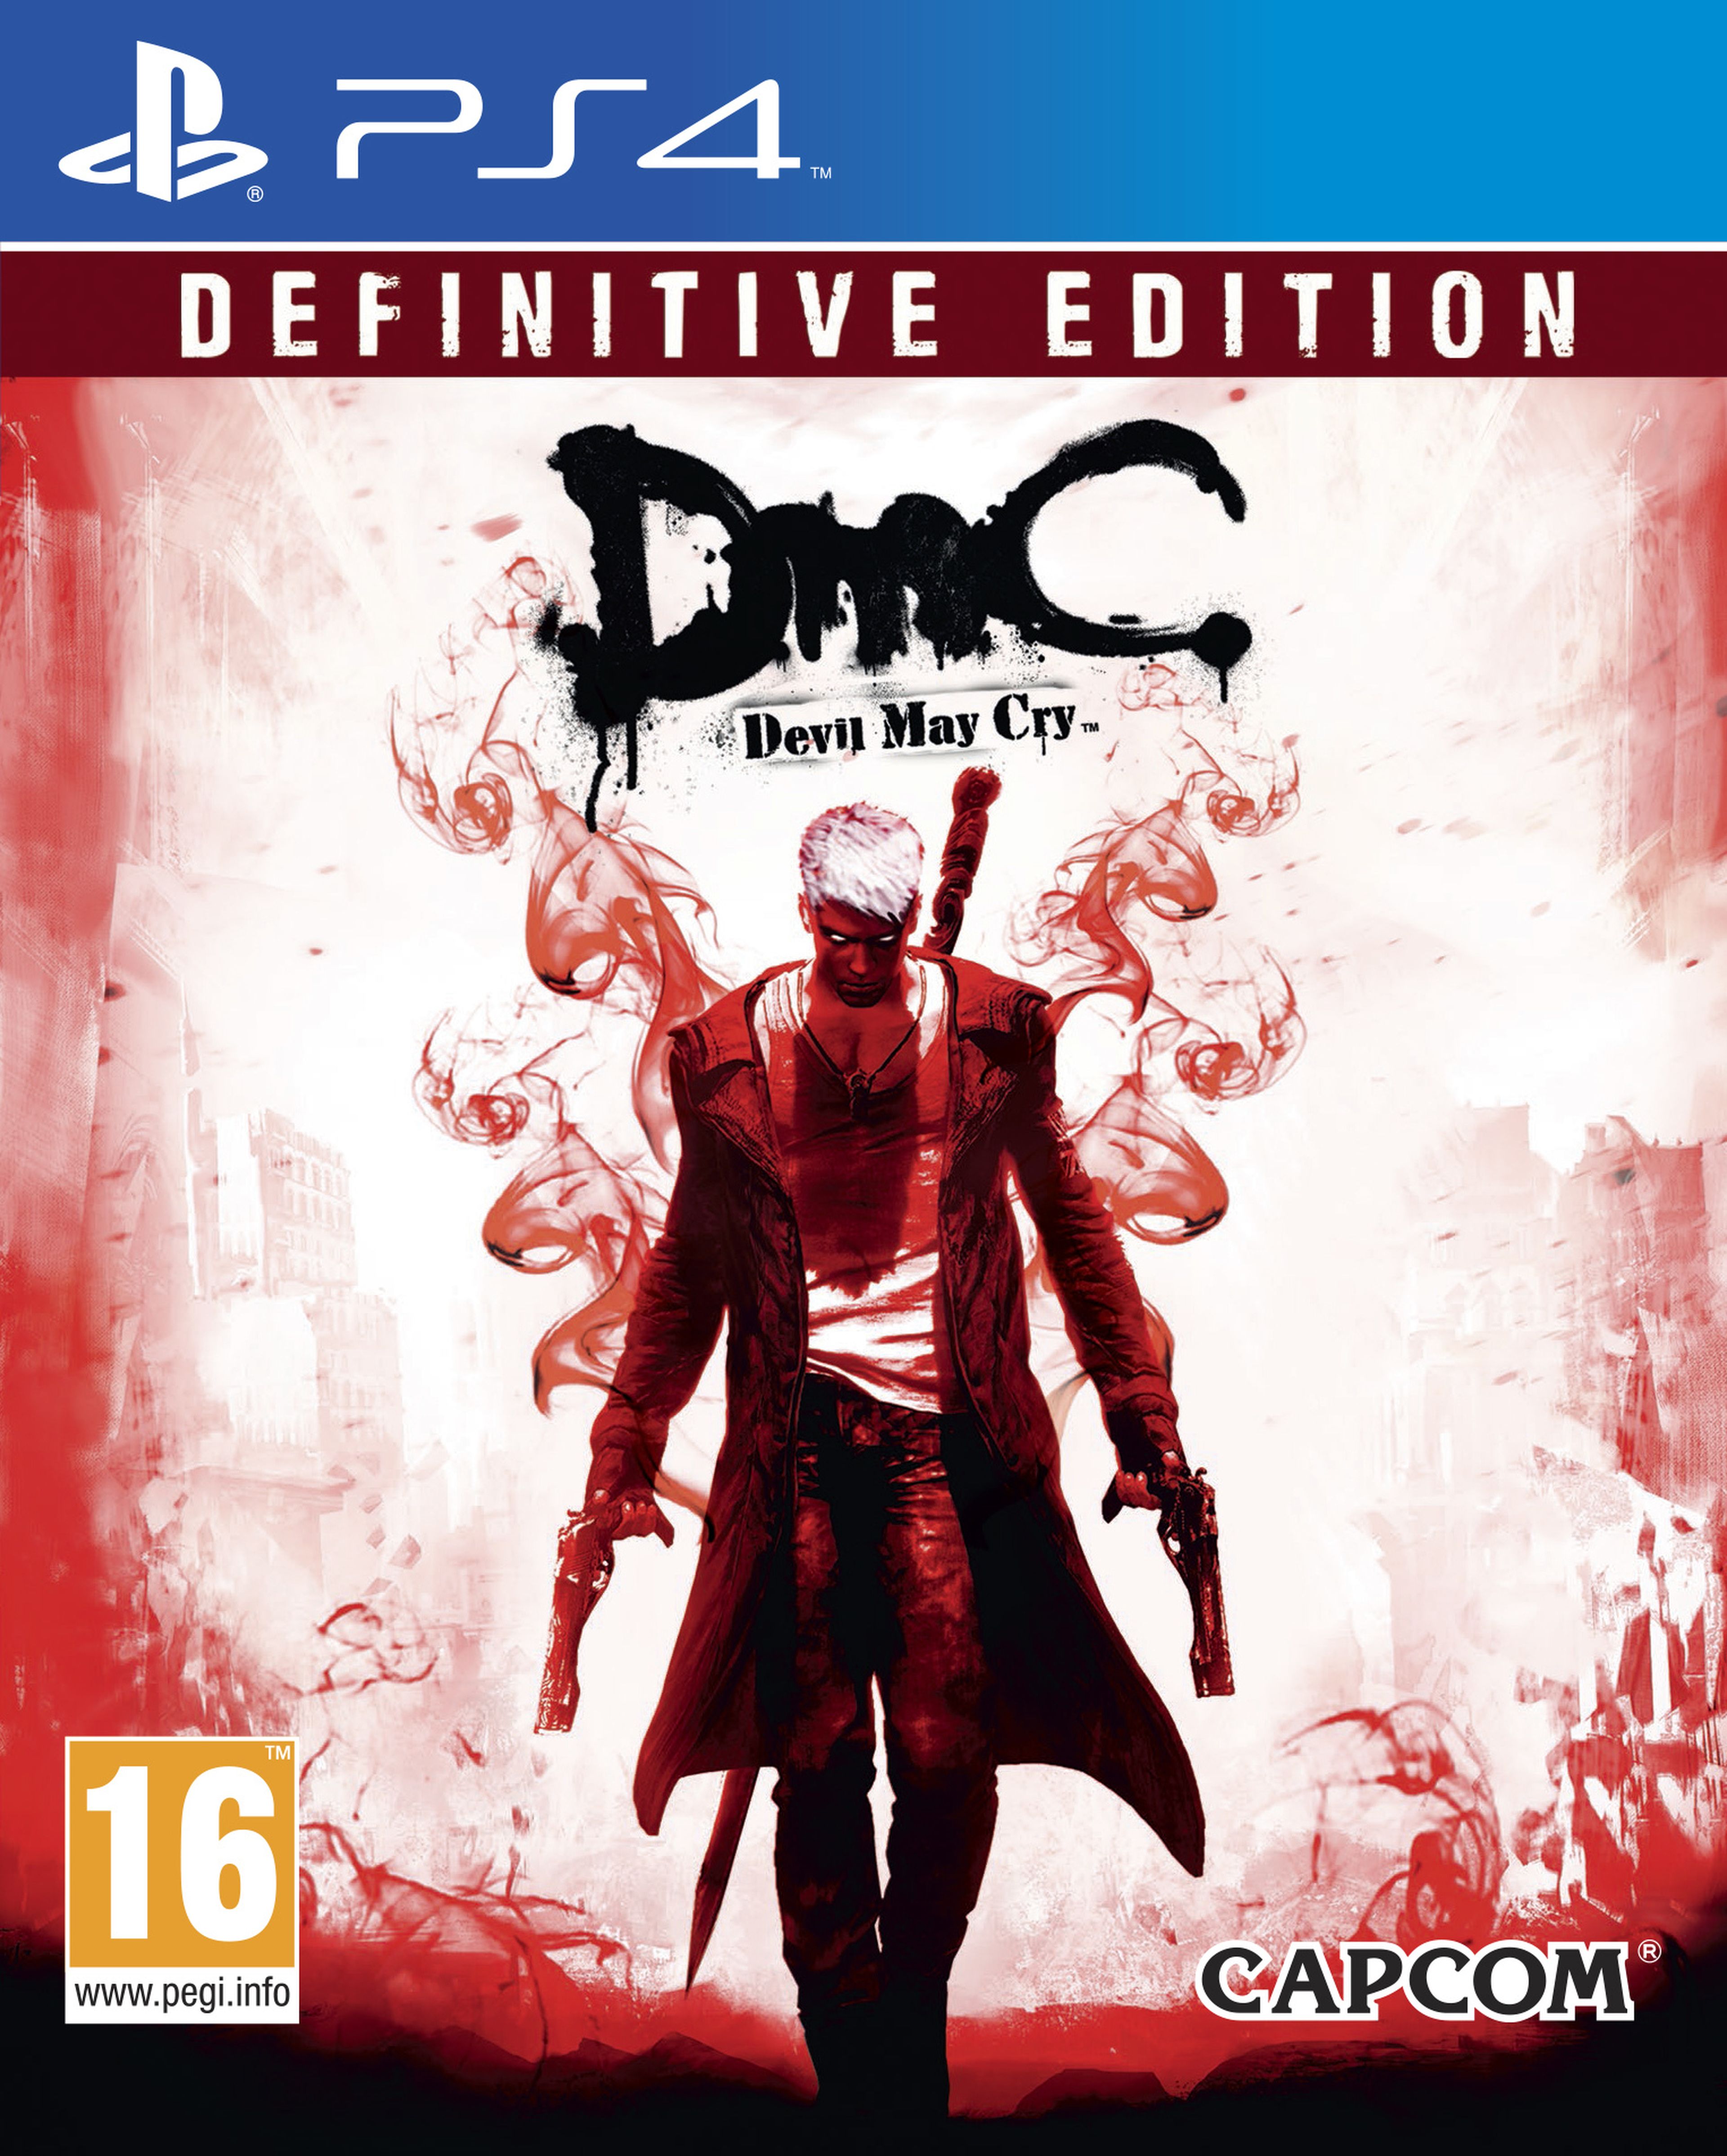 DmC y Devil May Cry 4 llegarán a PS4 y Xbox One